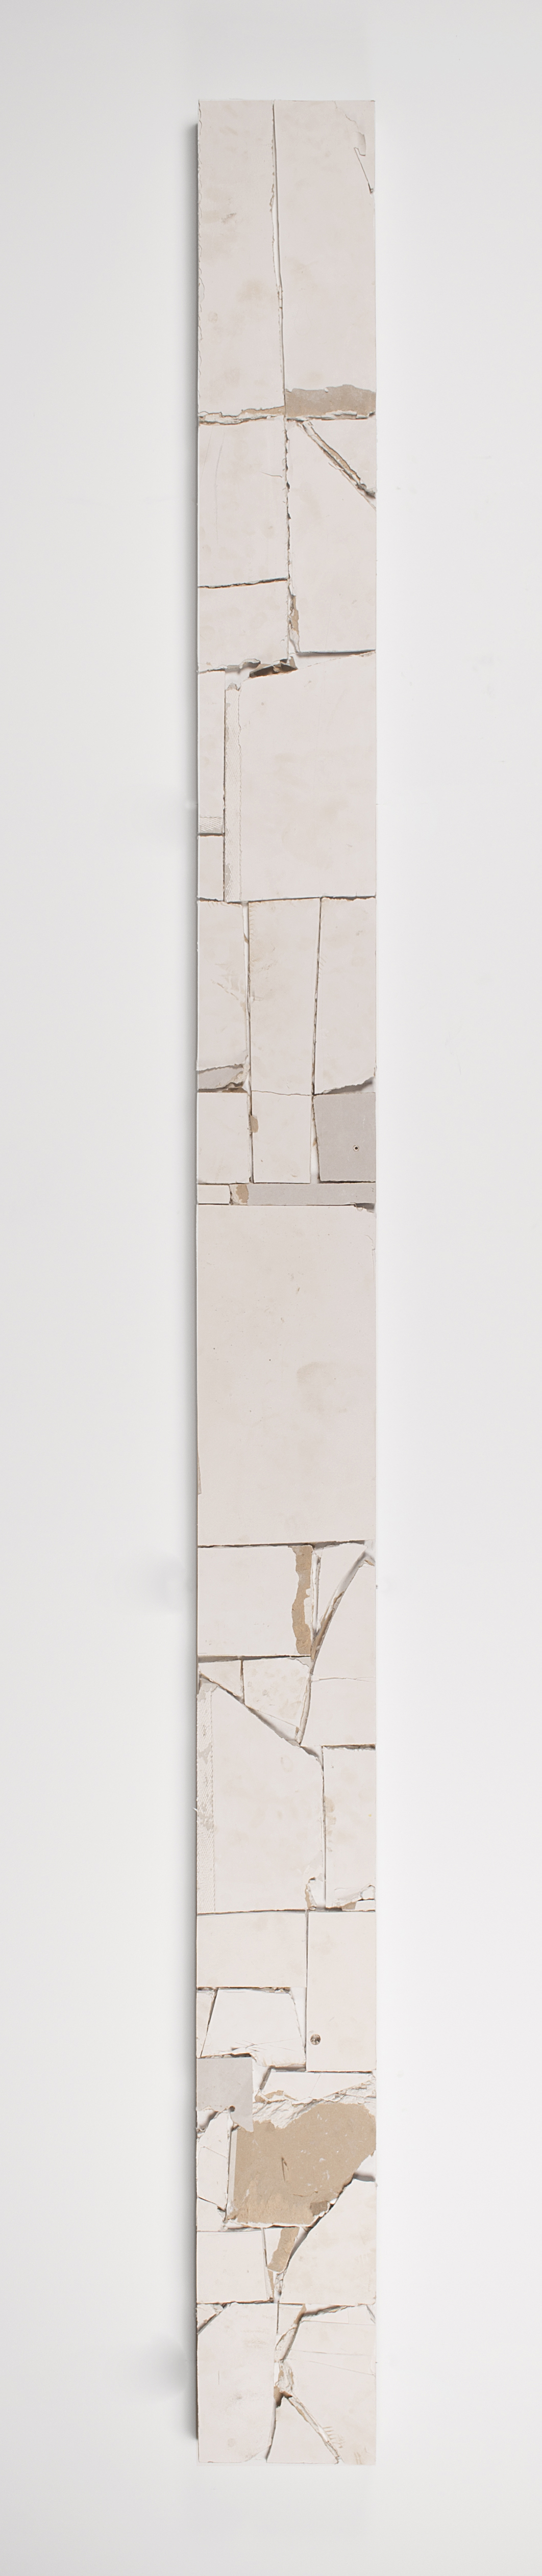 Pablo Rasgado. <em> Unfolded Architecture (M HKA 4)</em>, 2017. Acrylic on drywall, 118 1/8 x 11 x 2 9/16 inches